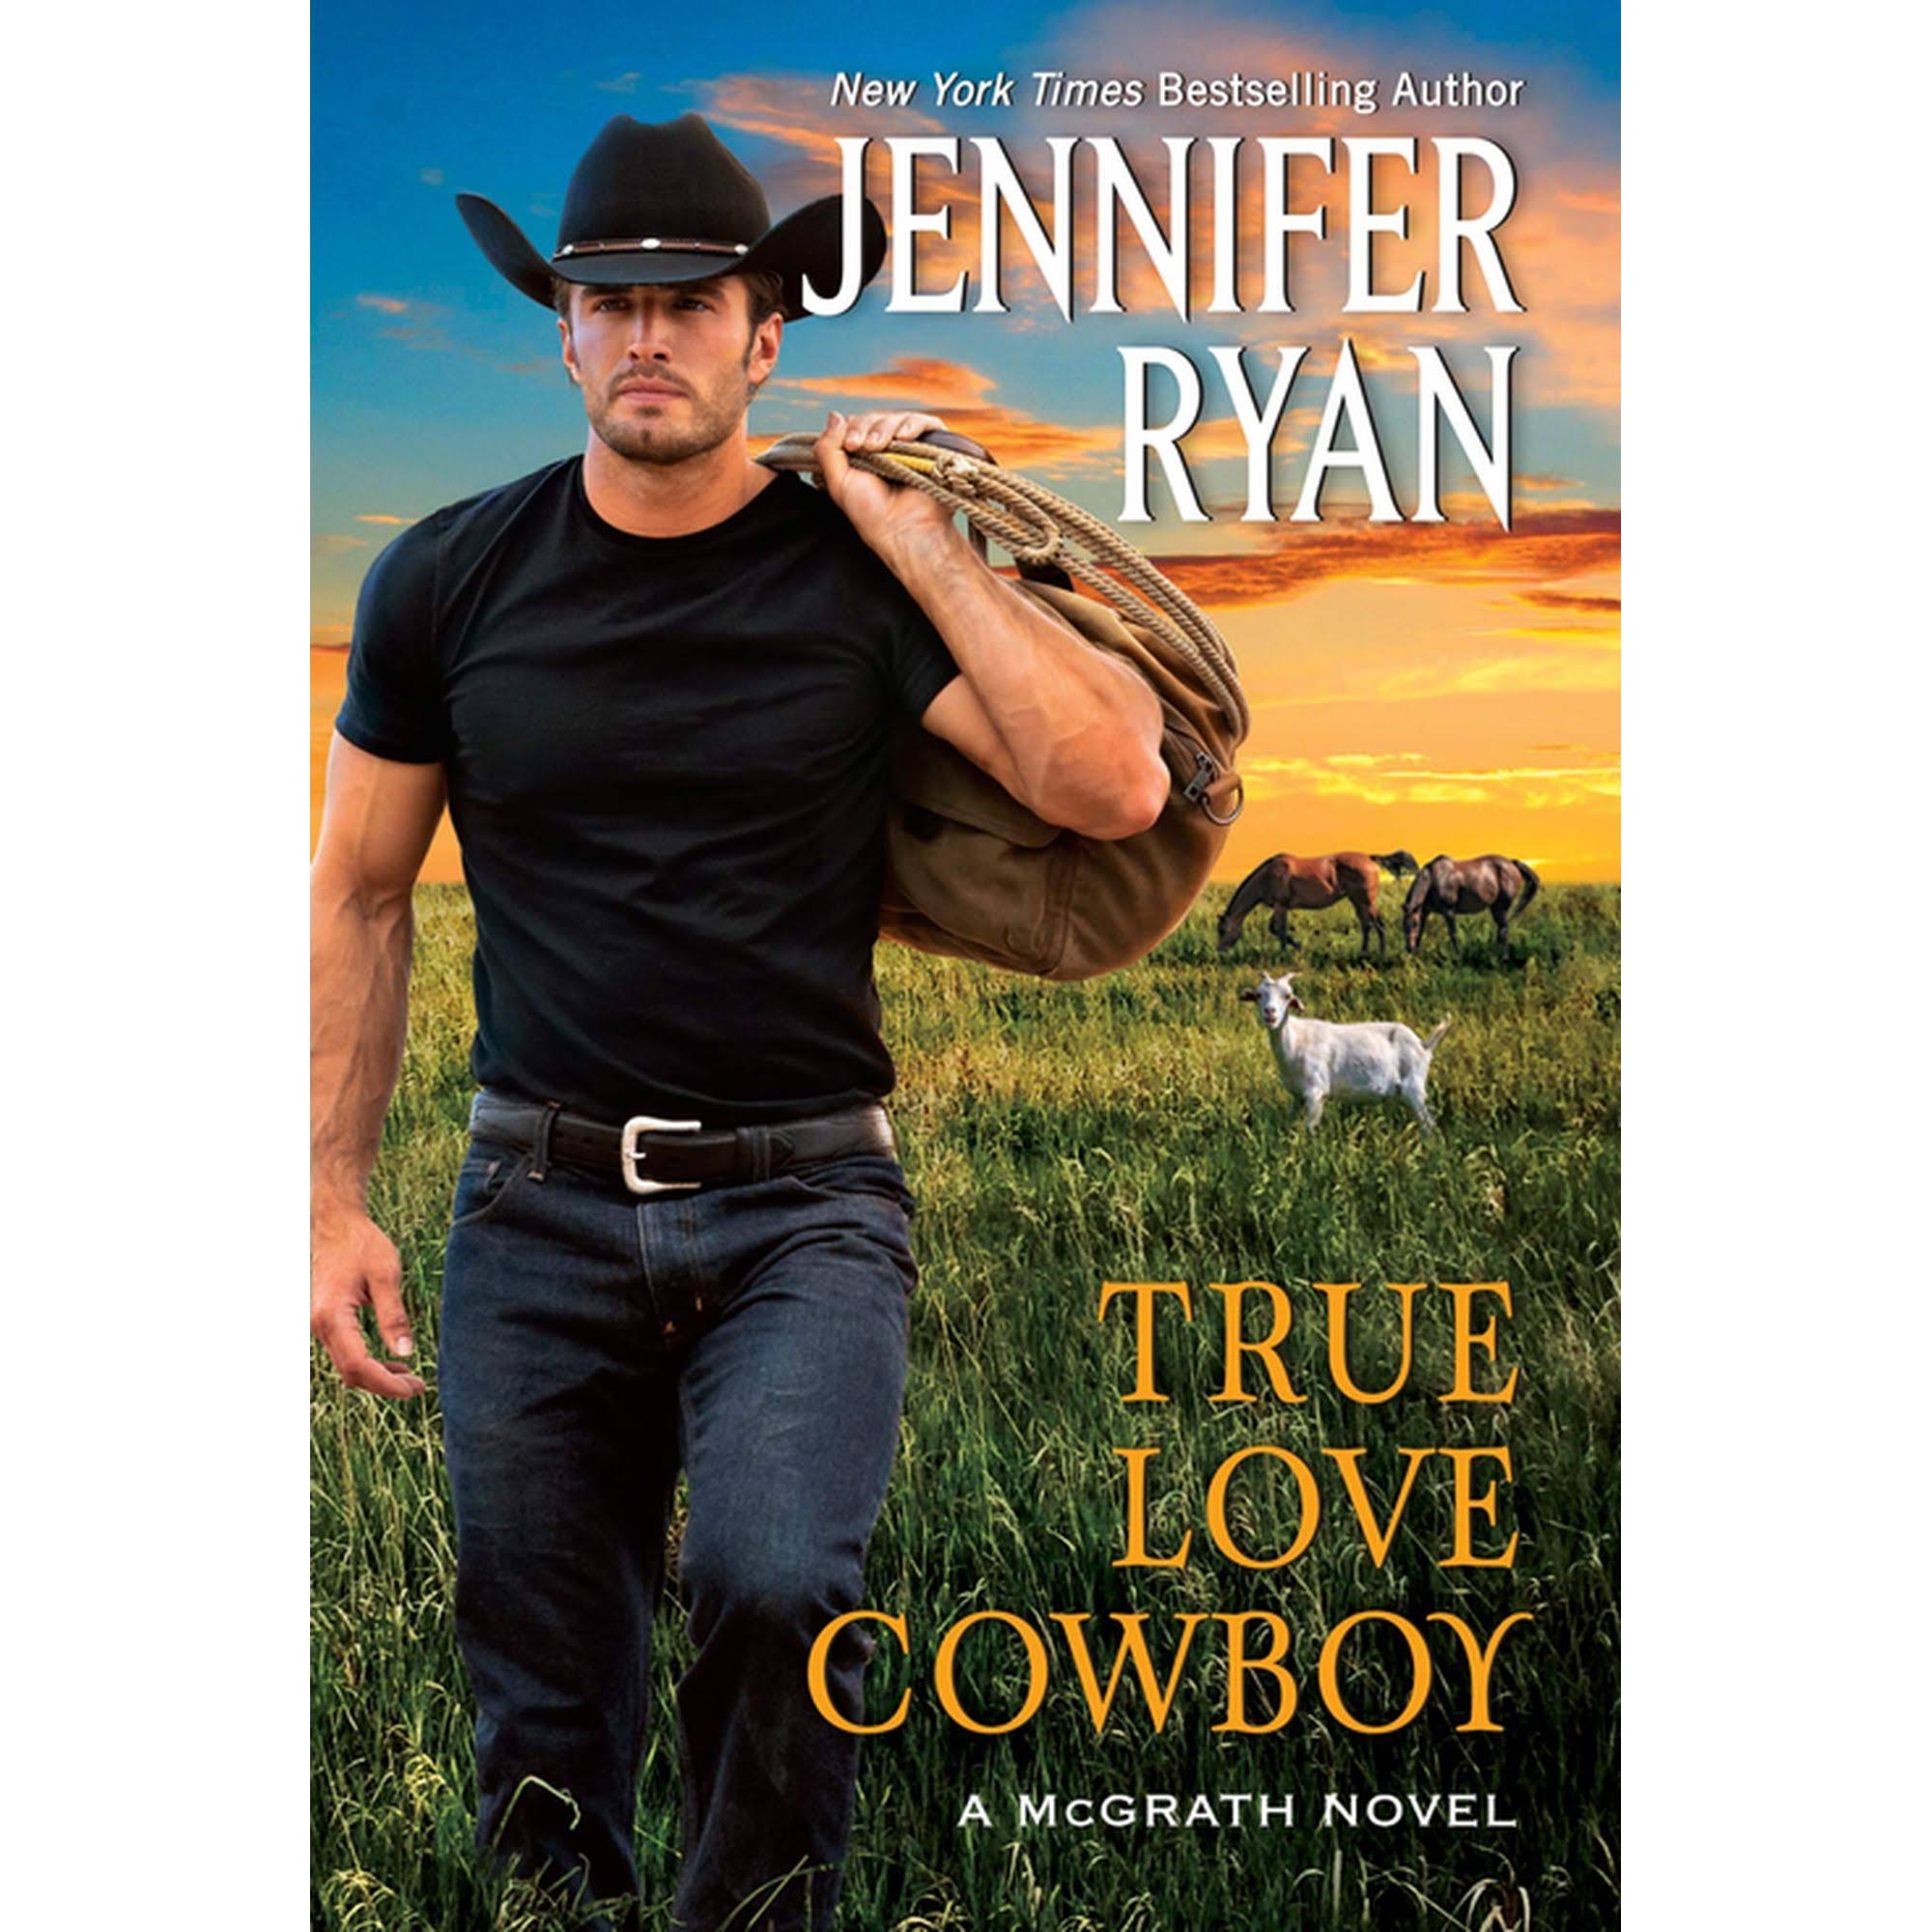 True Love Cowboy by Jennifer Ryan